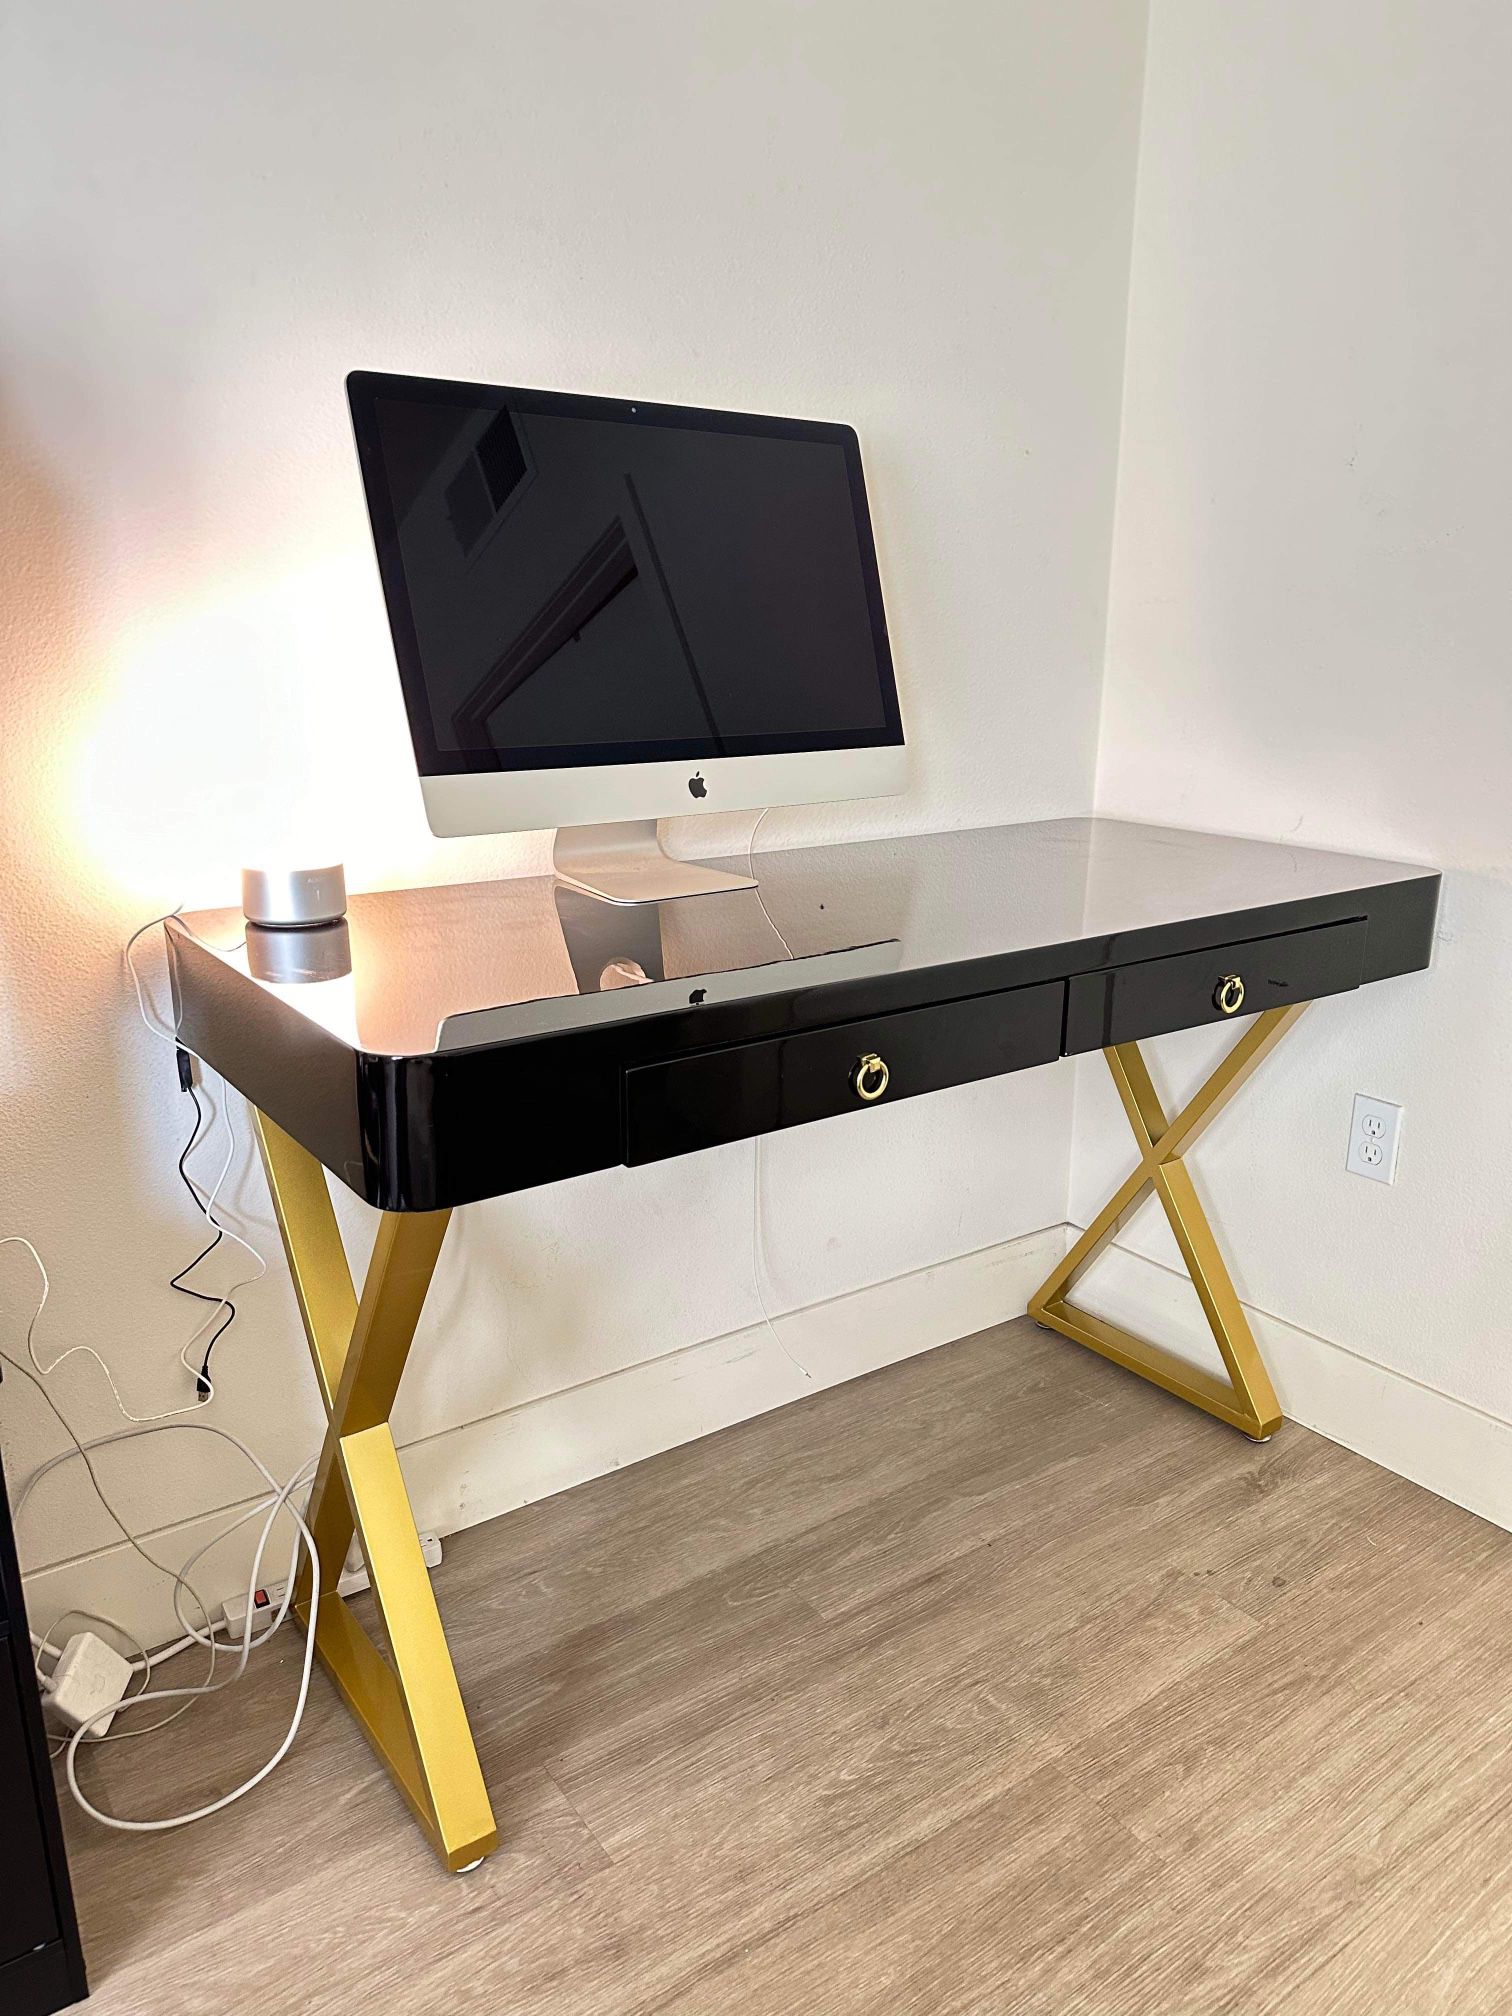 2-Drawers Black Office Desk 55" L x 24” wx33”H modern Writing Desk Gold legs ( used)